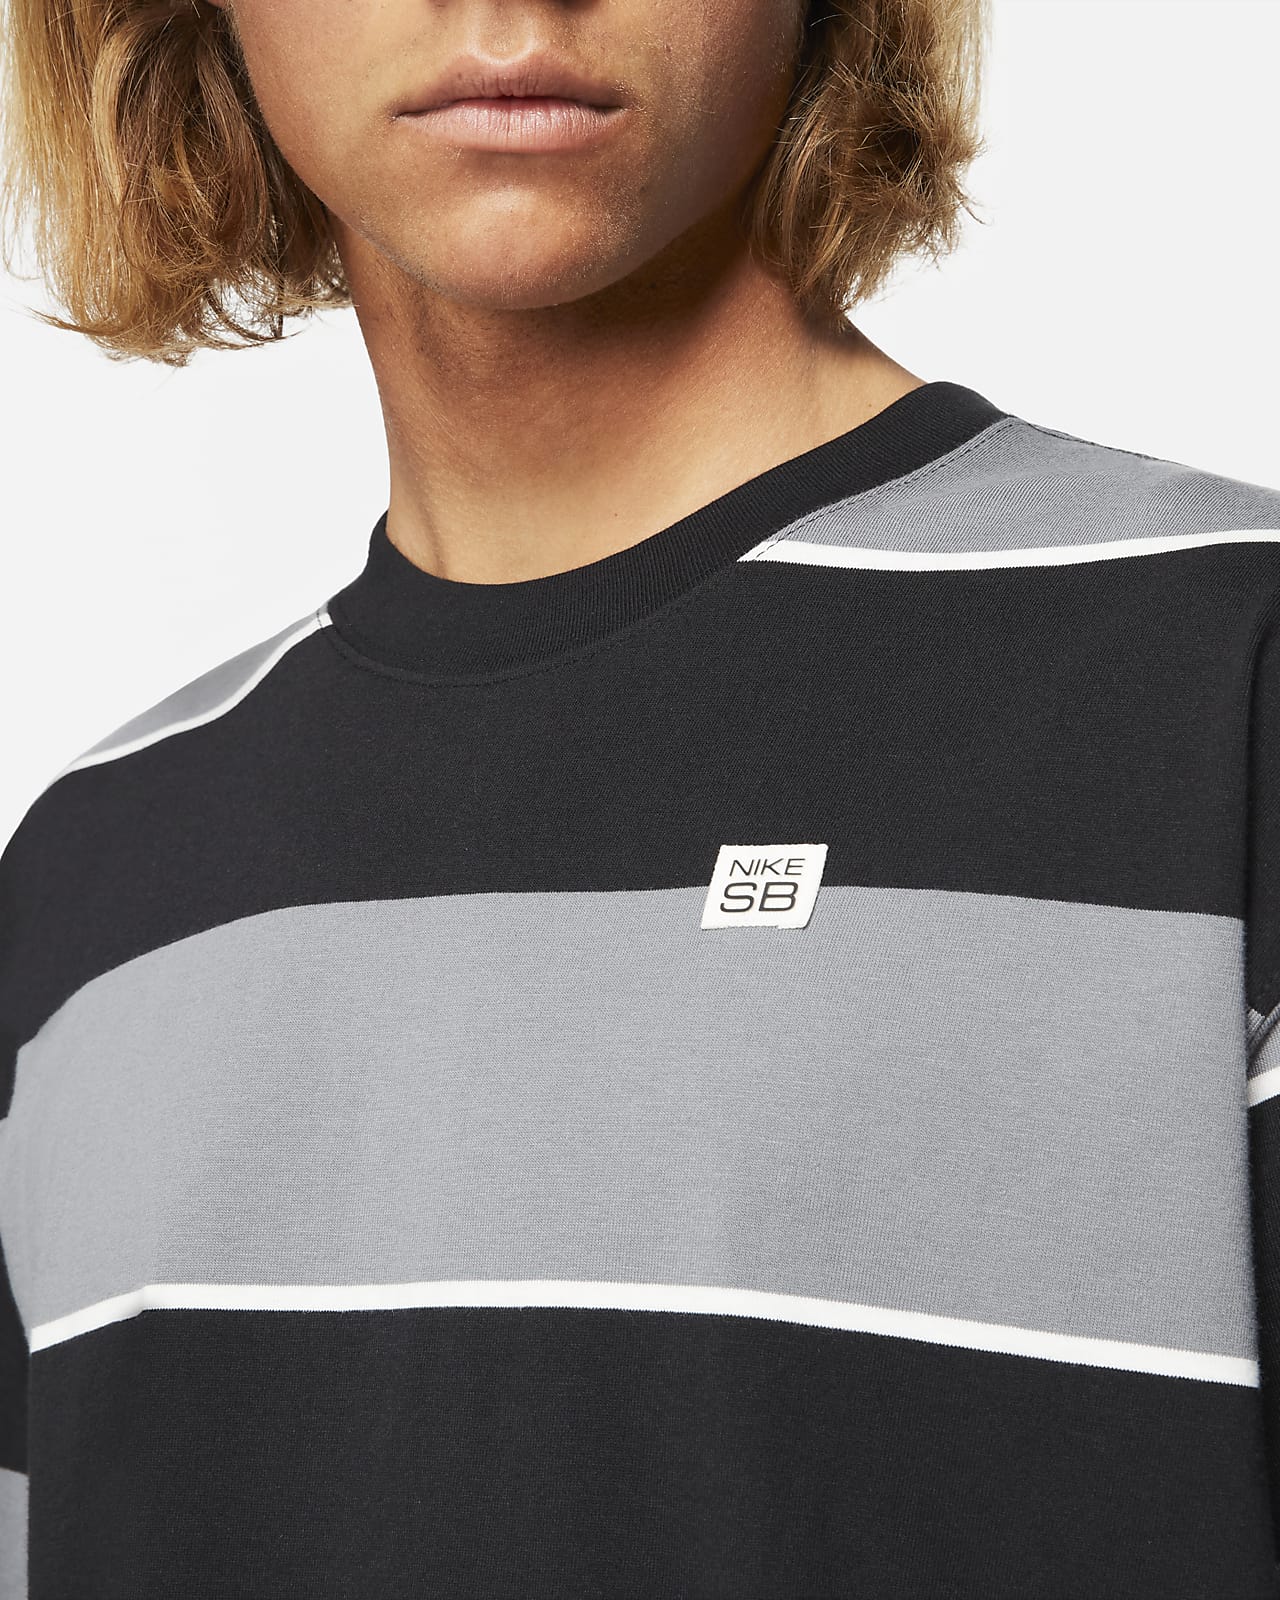 Nike SB Men's Striped Skate T-Shirt